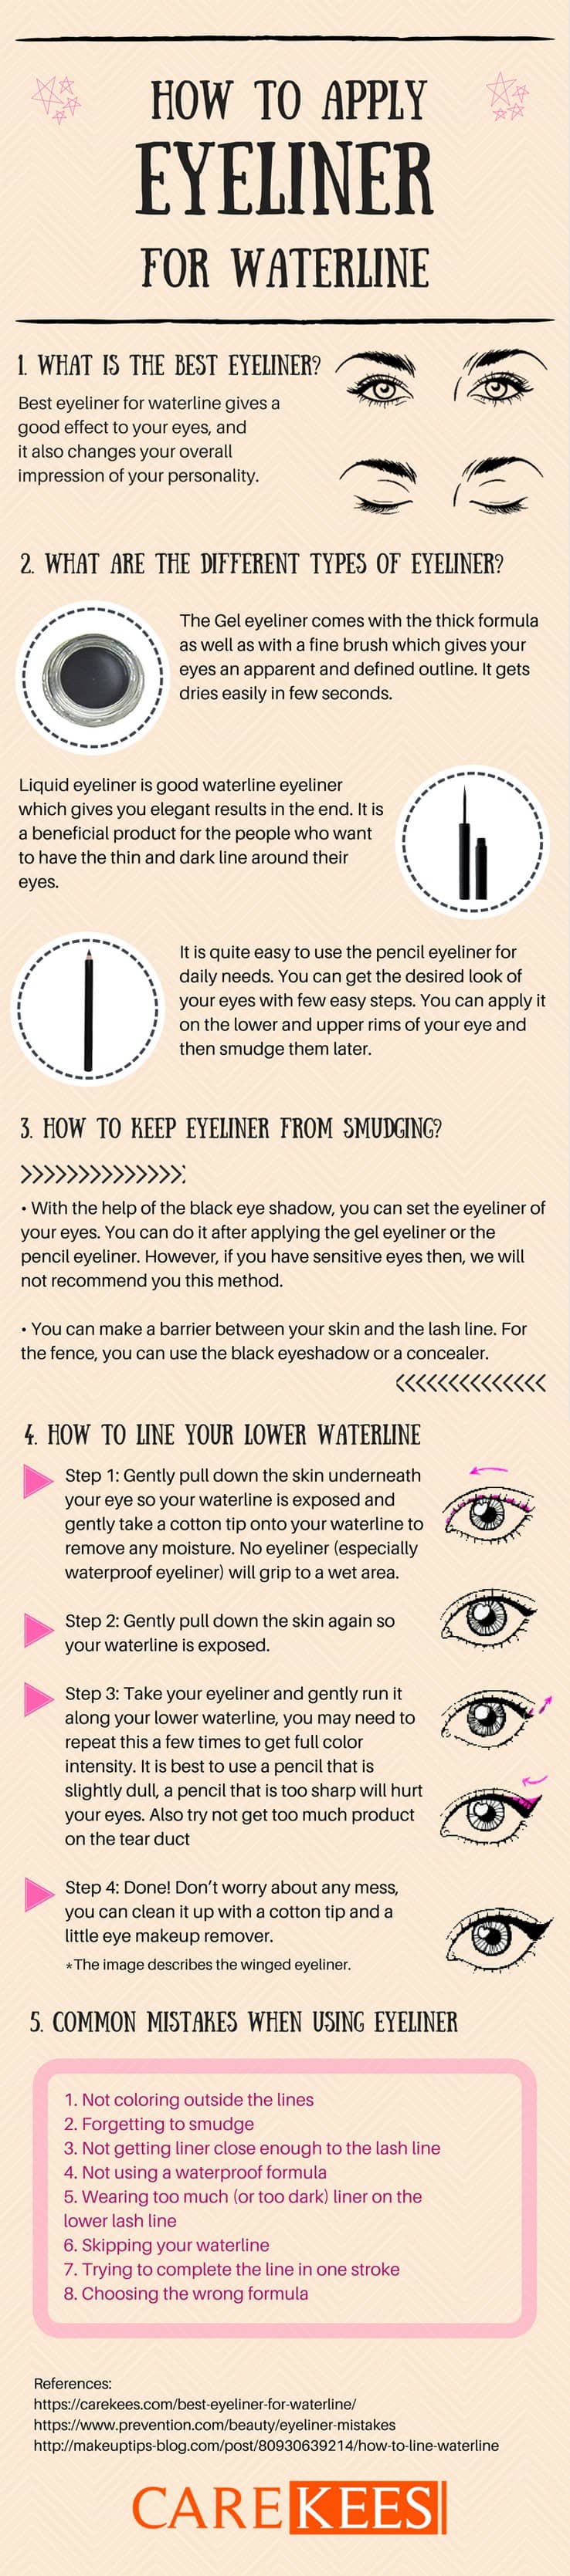 eyeliner for waterline